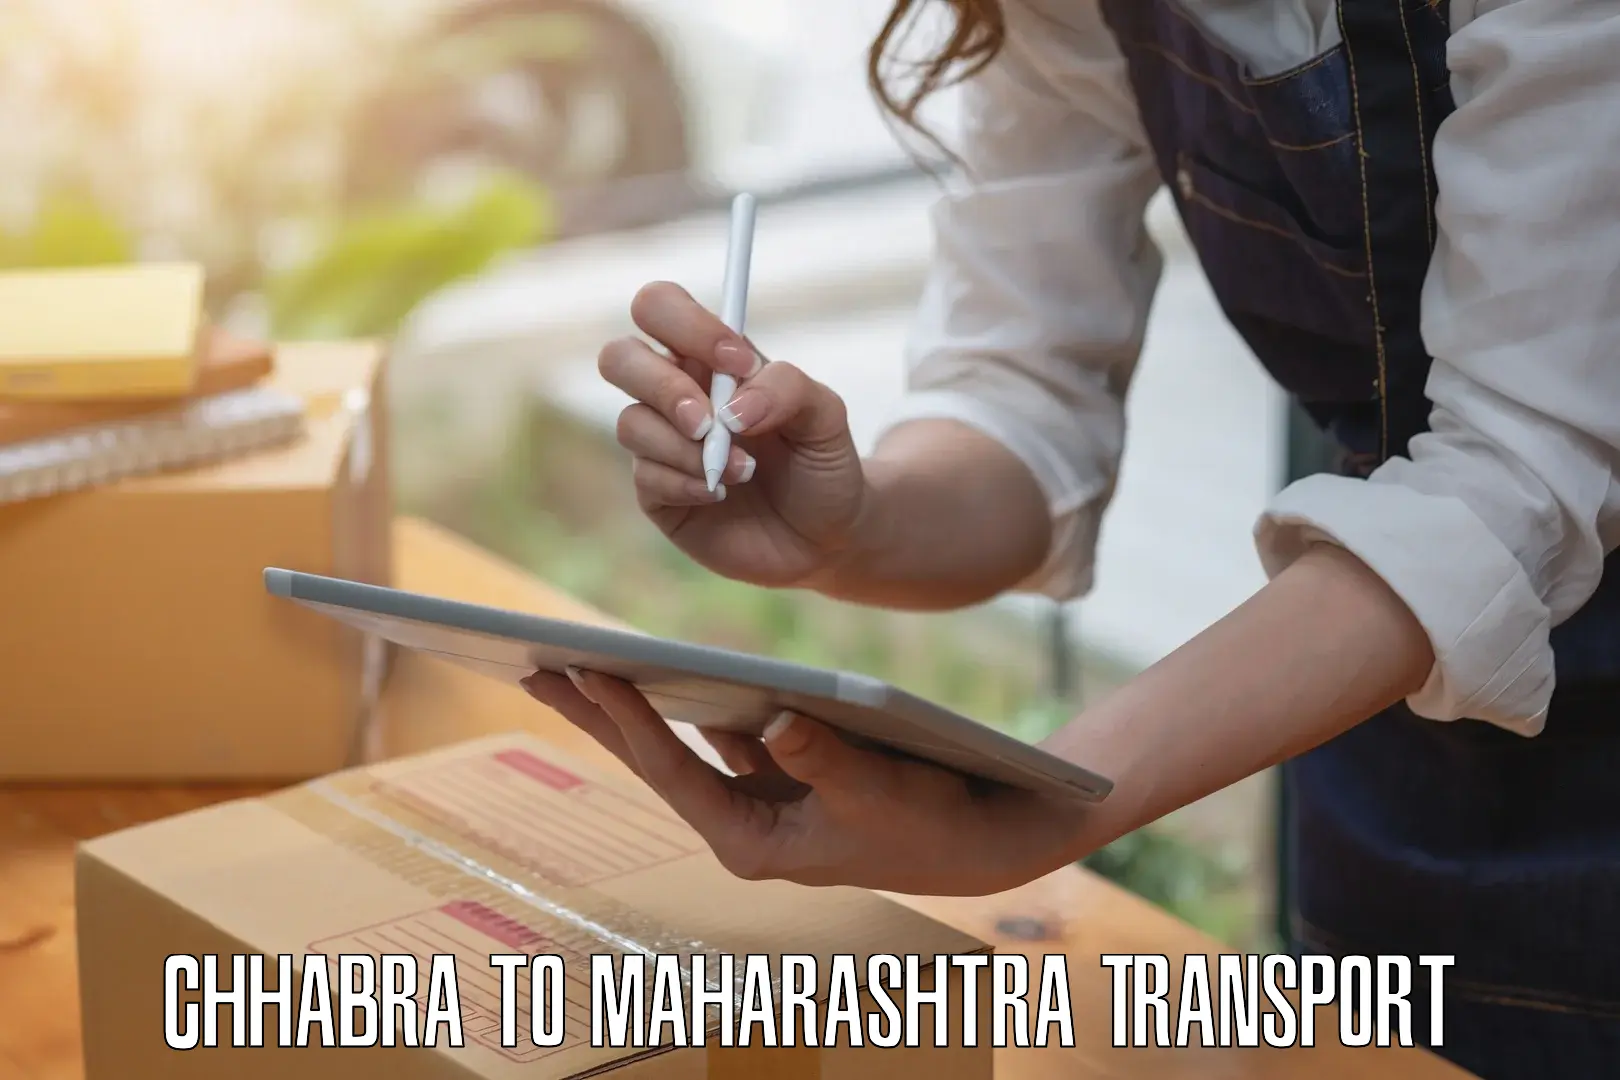 Transport in sharing Chhabra to Maharashtra